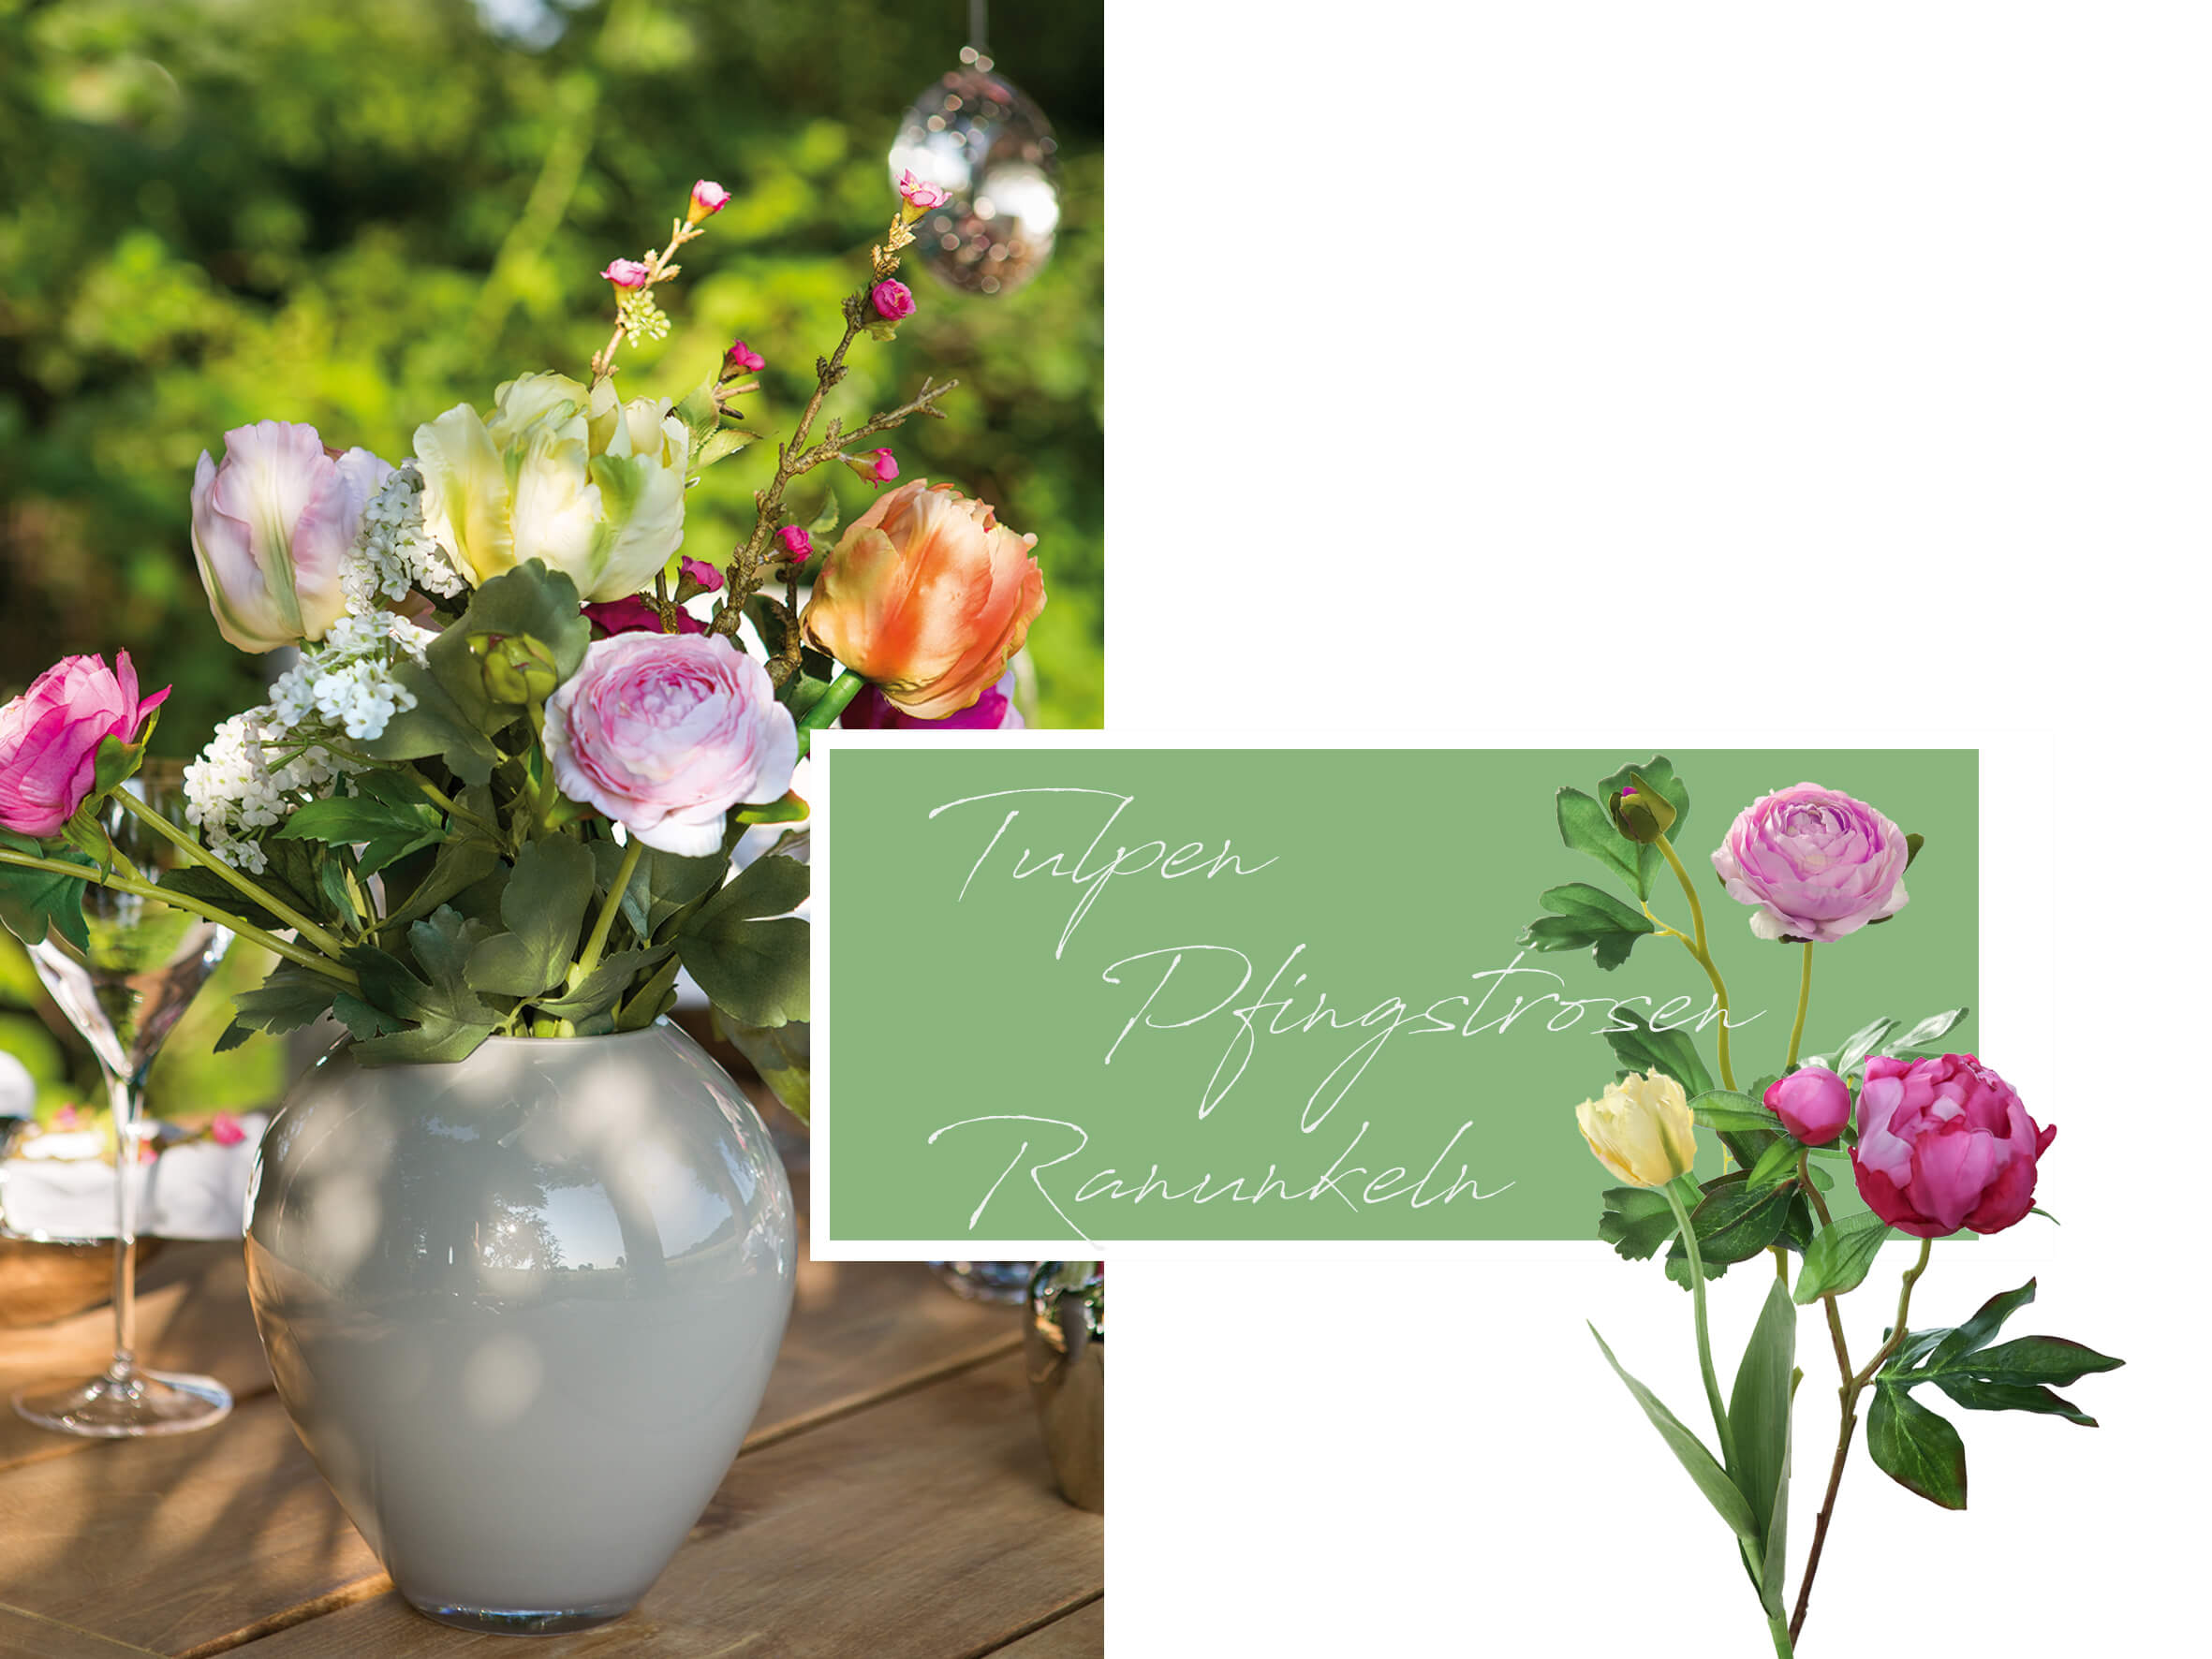 Blumendekoration mit Tulpen, Pfingstrosen und Ranunkeln.